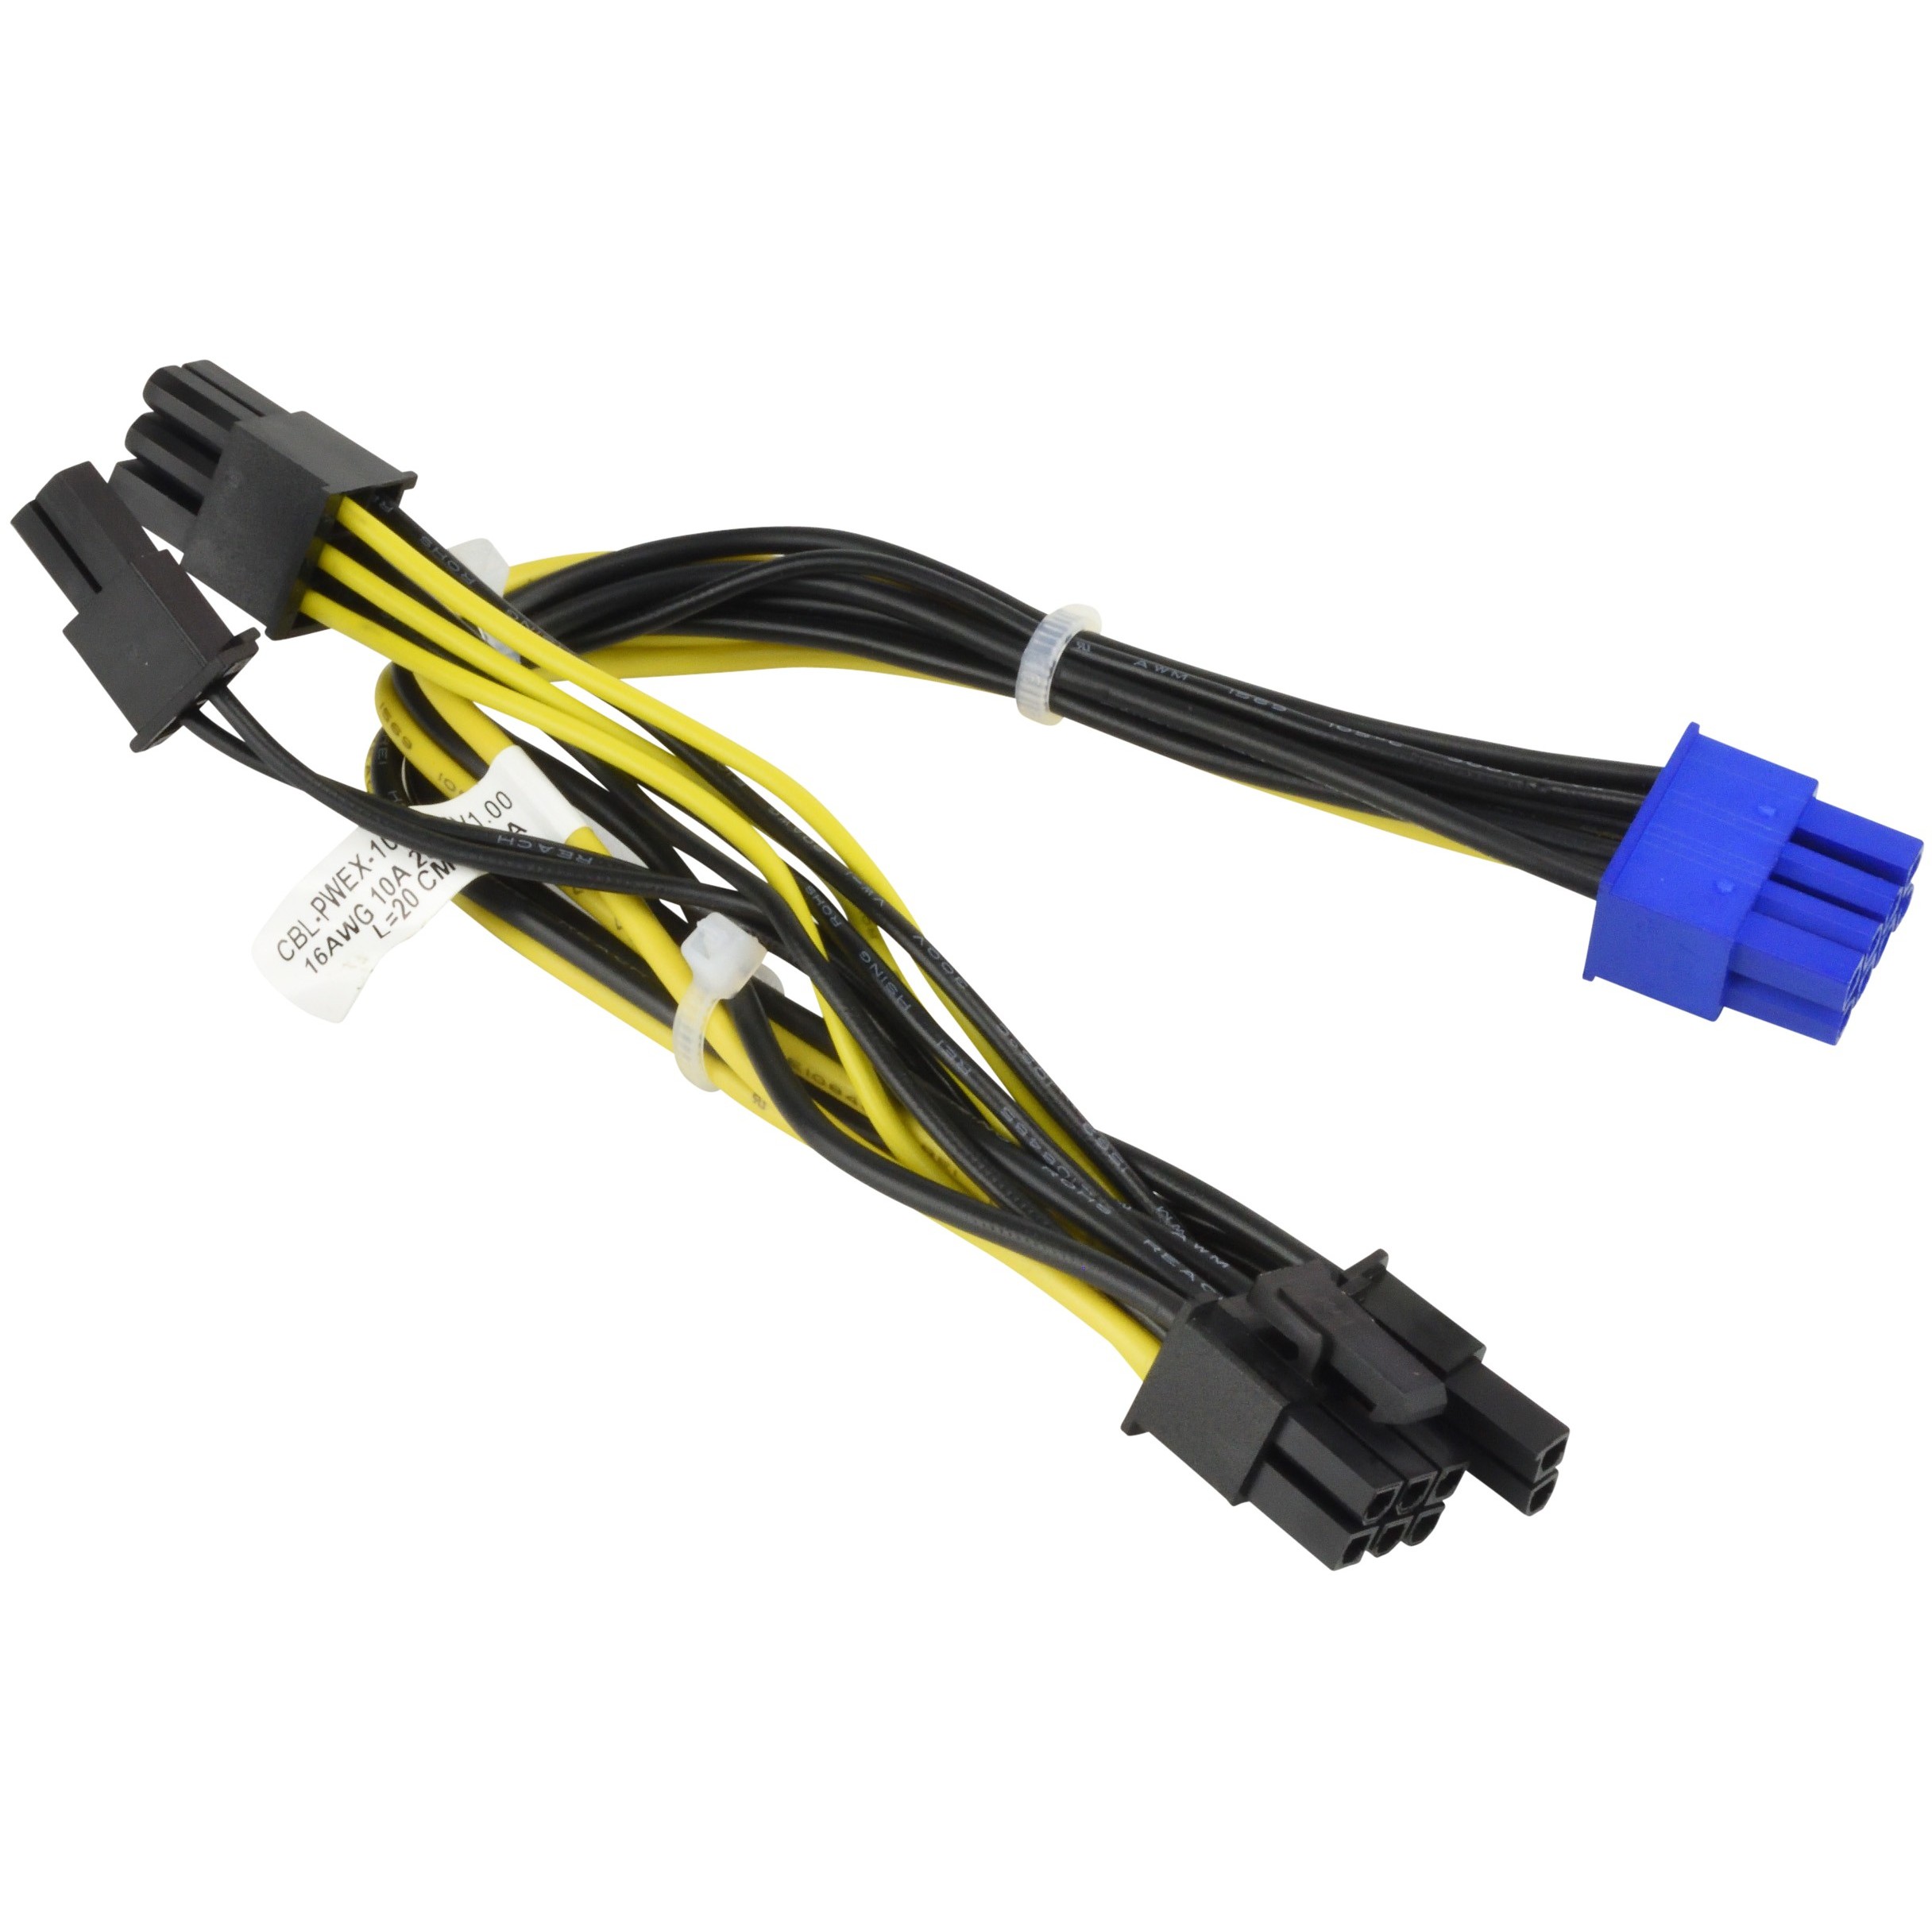 Supermicro CBL-PWEX-1017 internal power cable